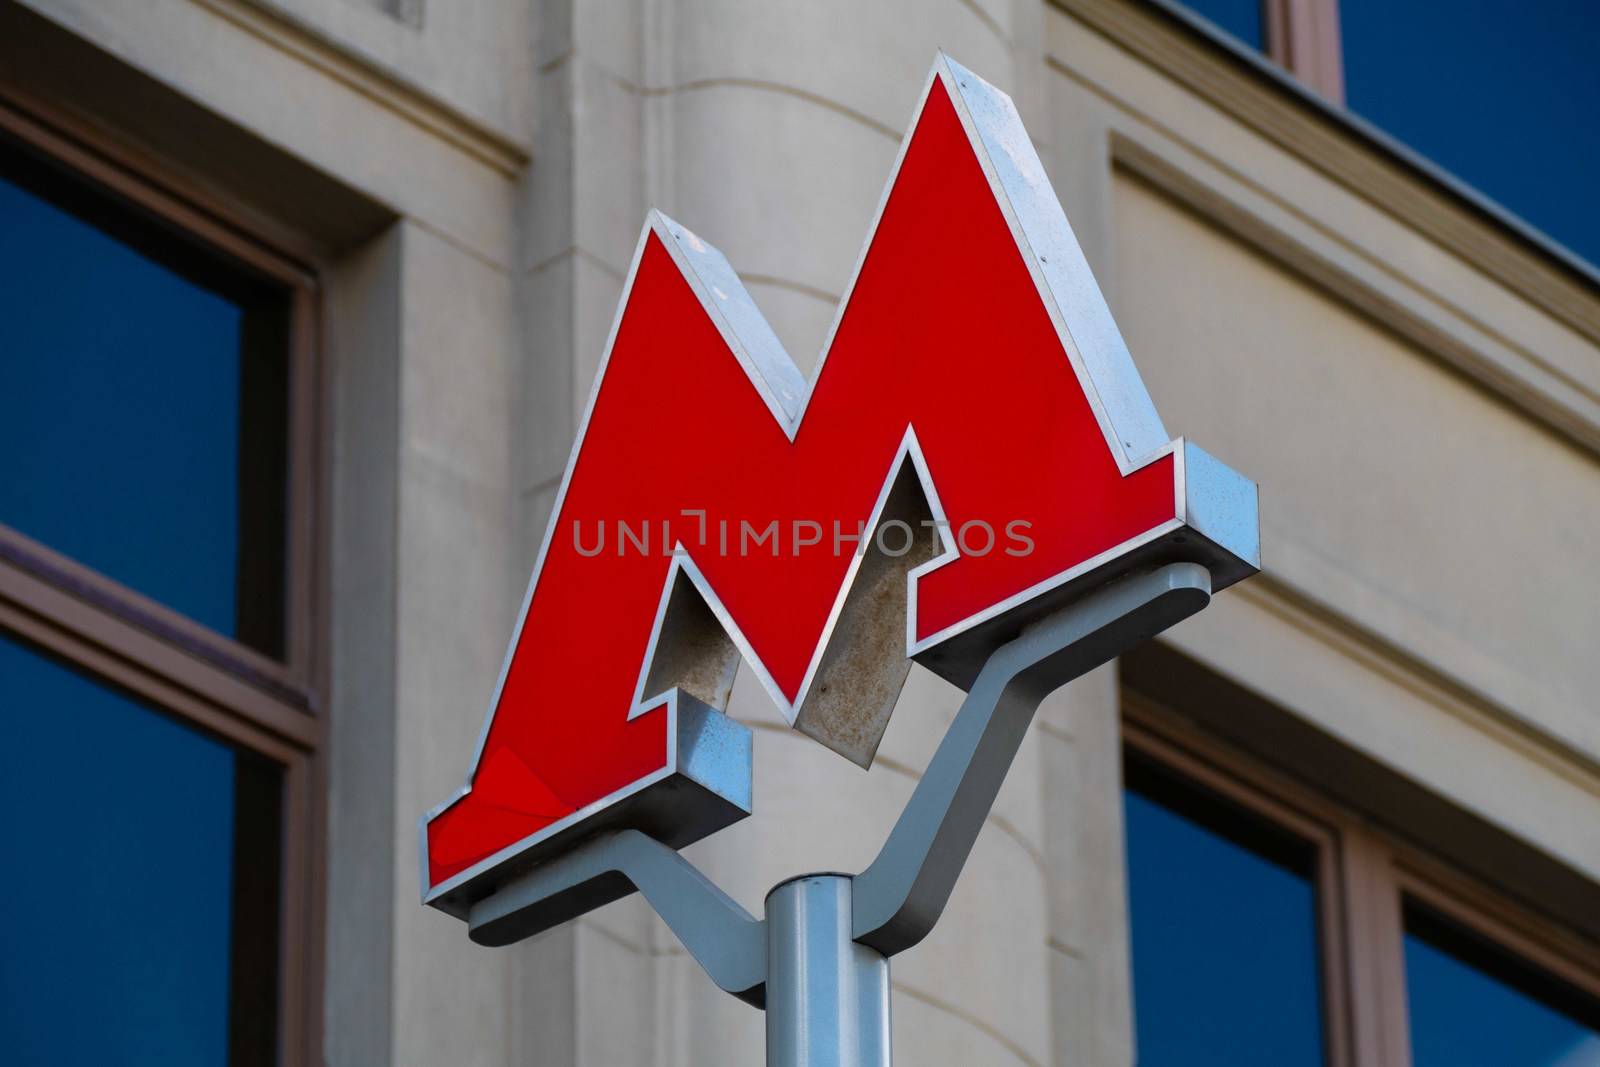 Symbol M-underground transport in Moscow 2020